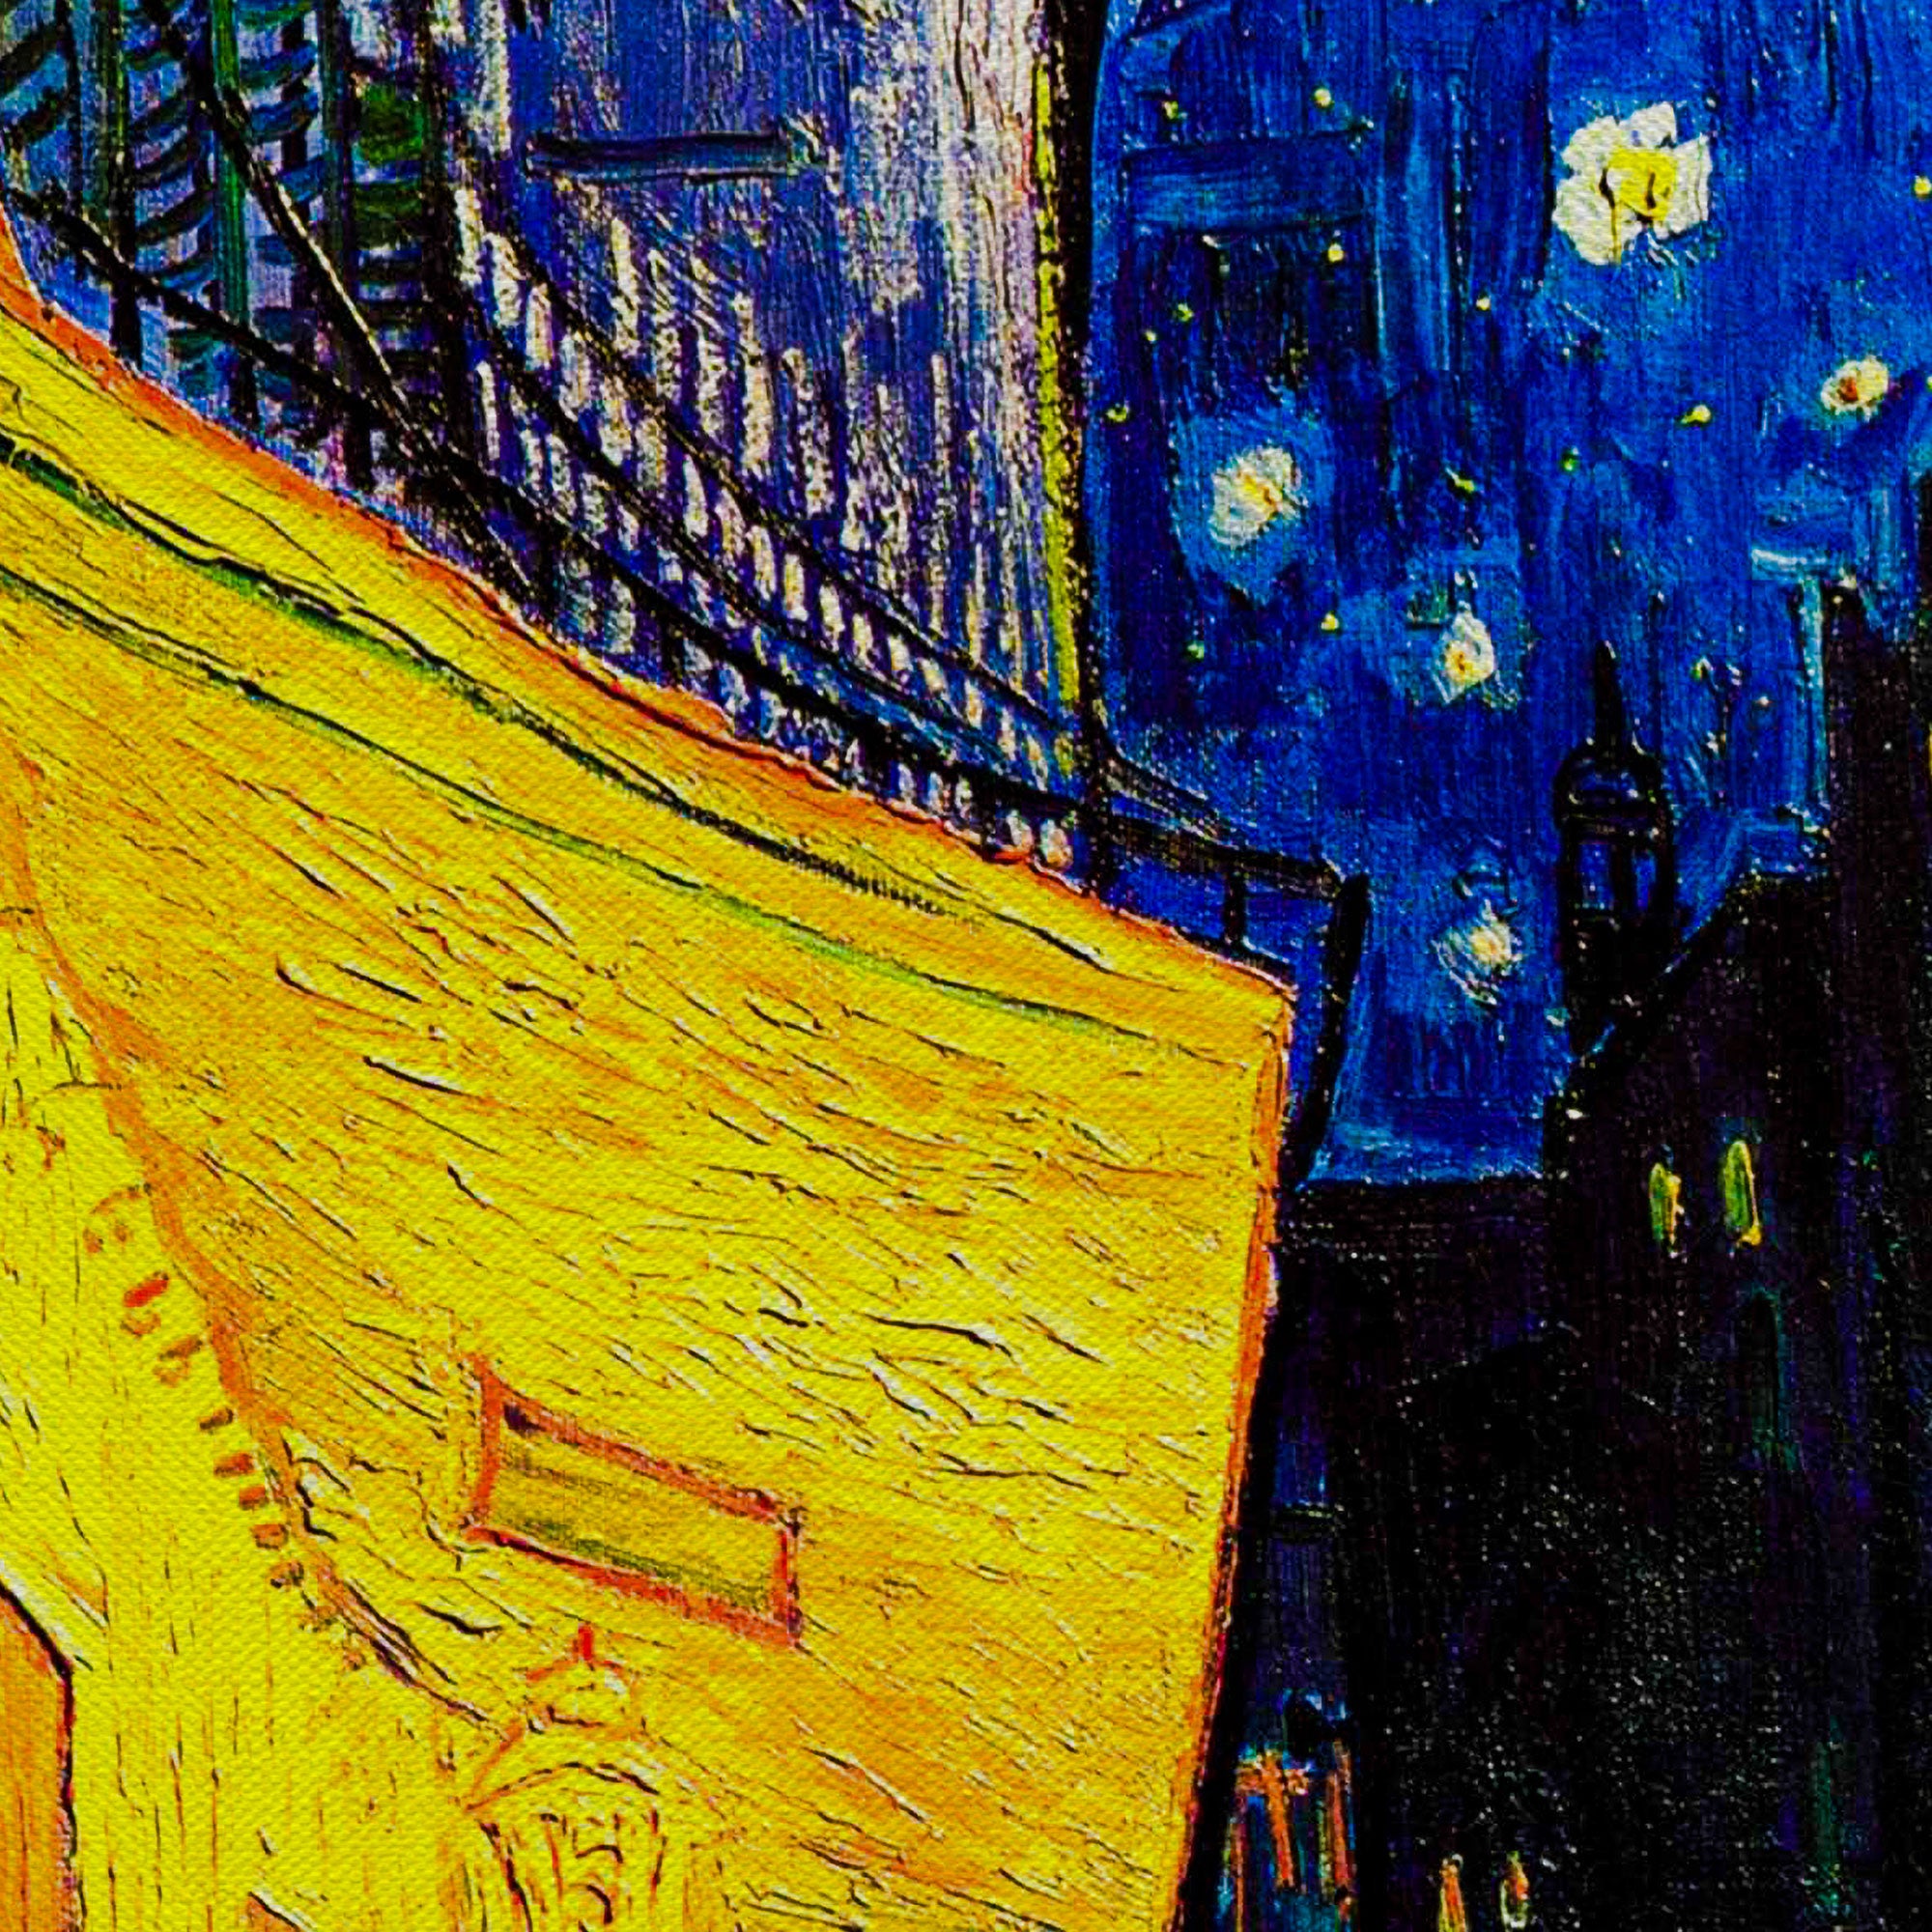 Vincent van Gogh Cafe Terrace at Night Canvas Wall Art